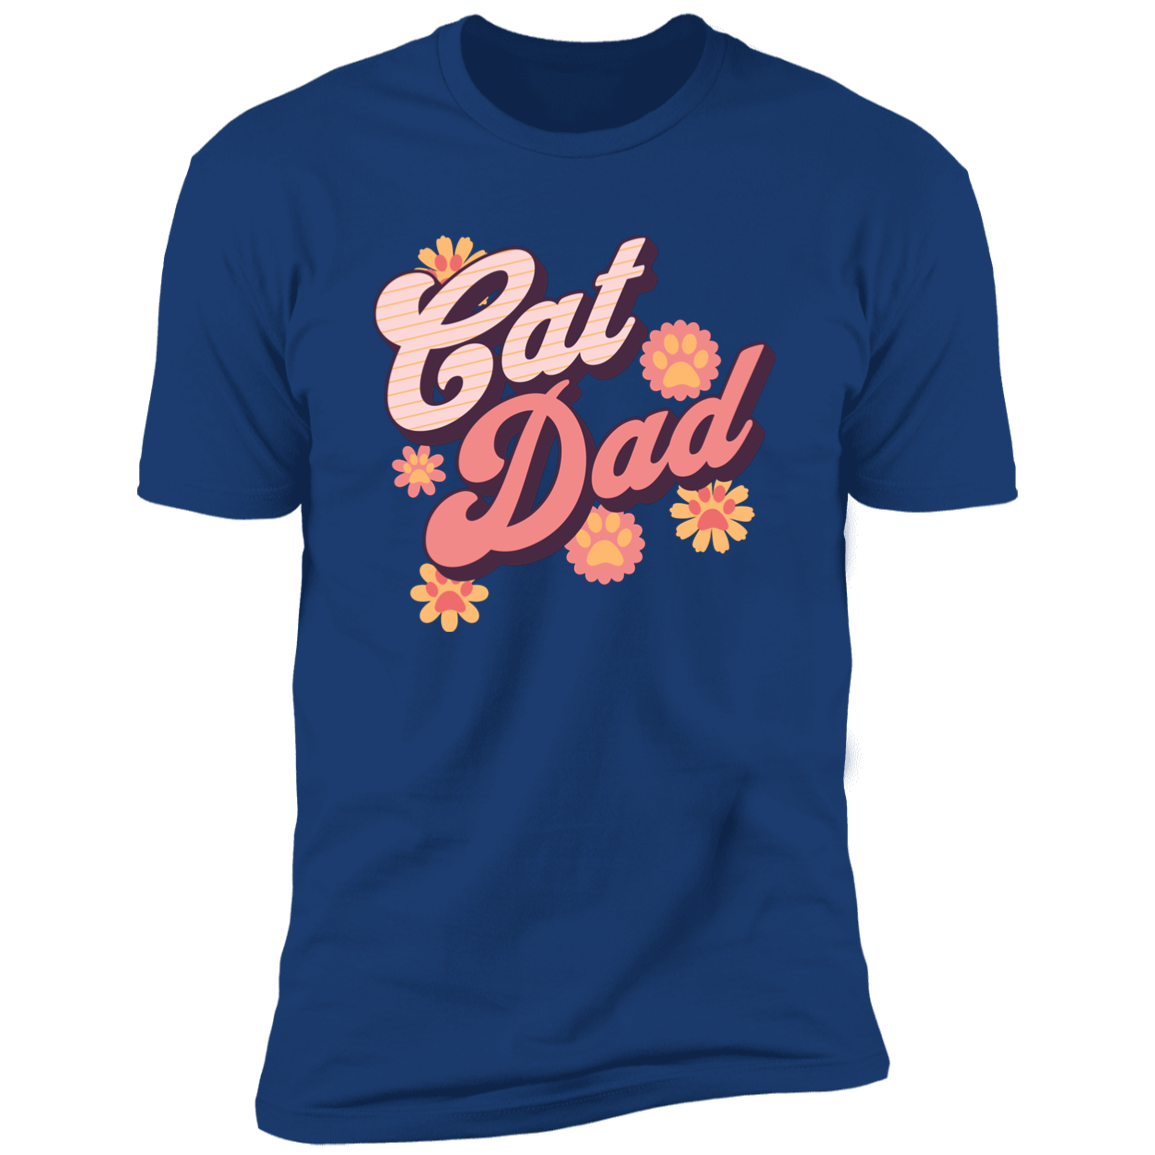 Cat Dad Retro T-shirt, Cat shirt for humans, retro cat dad t-shirt, in royal blue